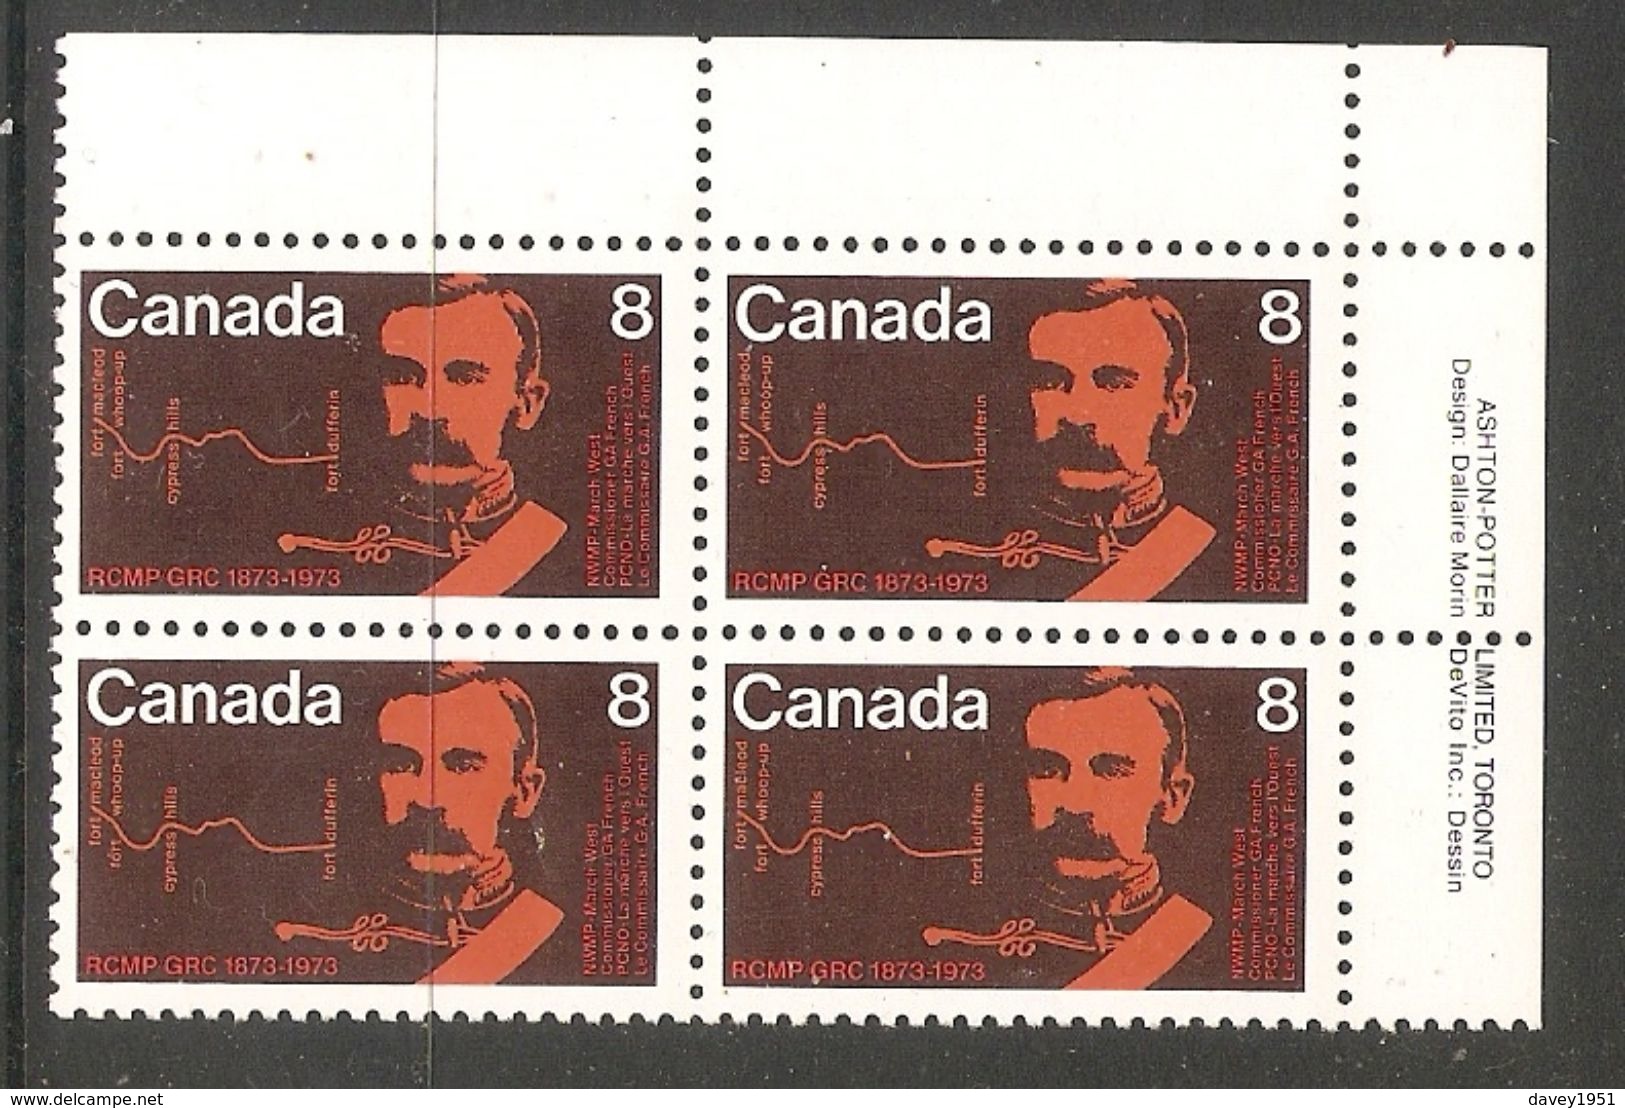 006341 Canada 1973 RCMP 8c Plate Block UR MNH - Plate Number & Inscriptions